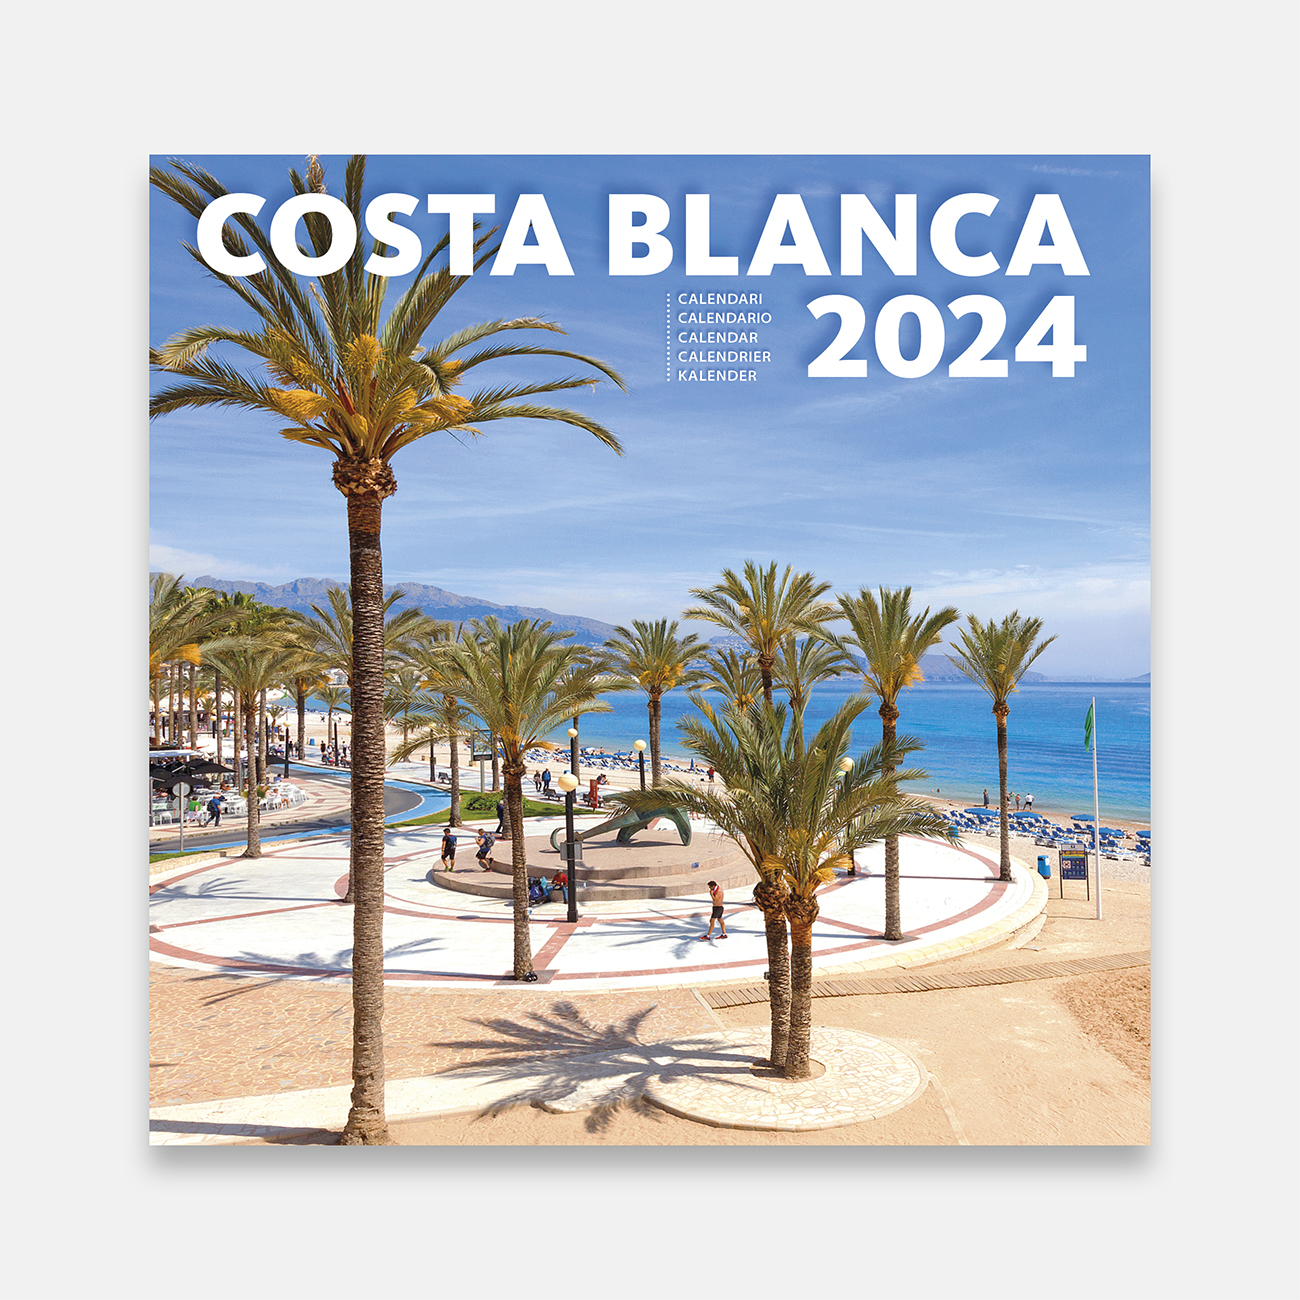 Calendari 2025 Costa Blanca 25bl b calendario pared 2025 costa blanca